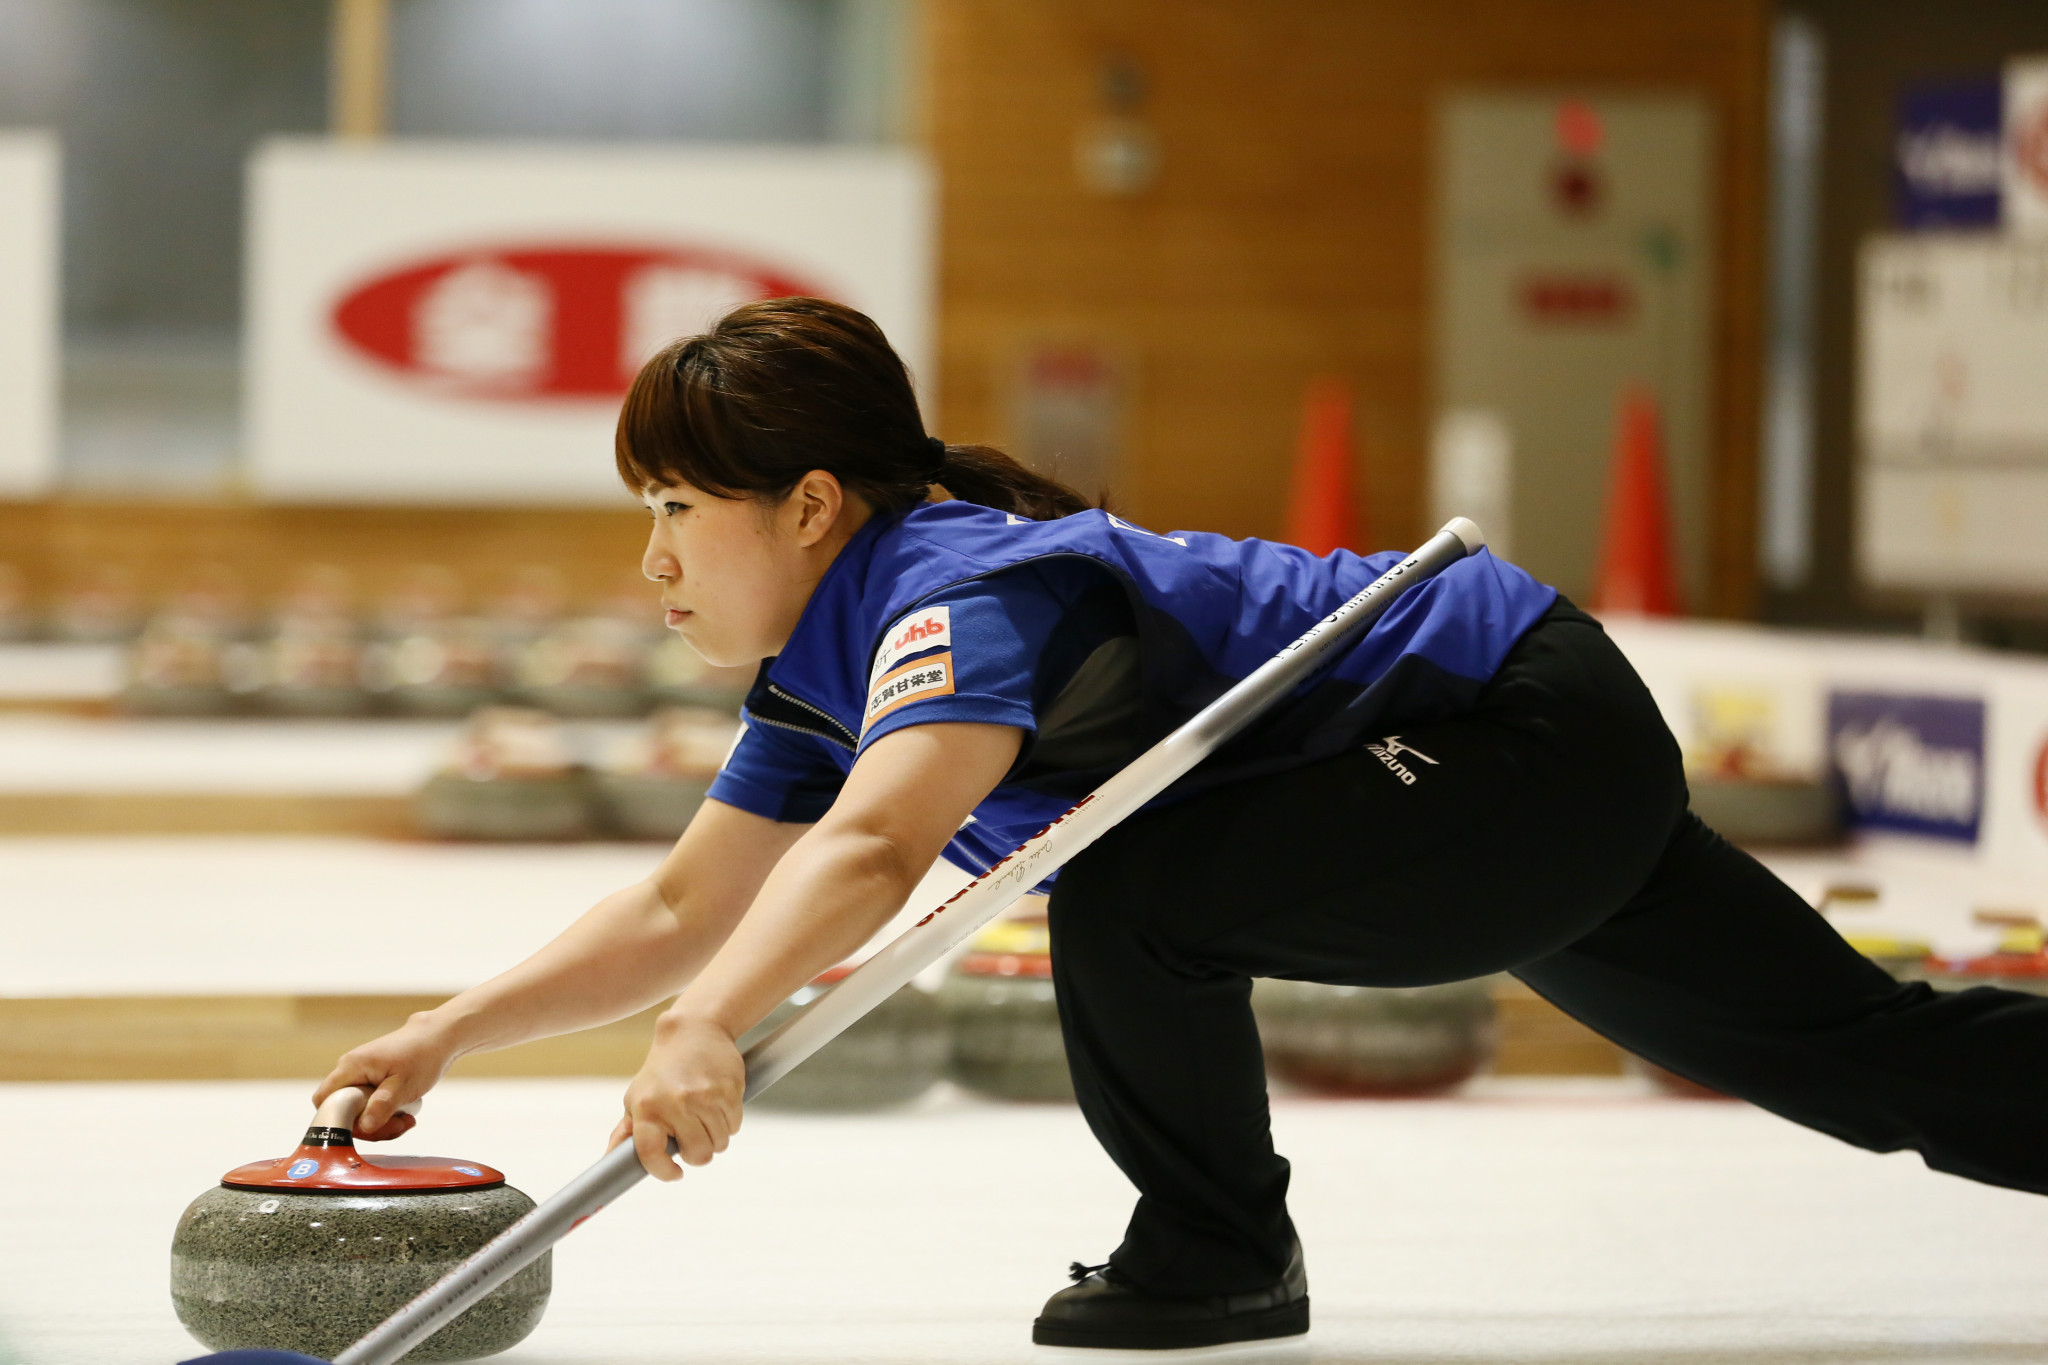 LS Kitami to represent Japan in women's curling at Pyeongchang 2018 Winter Olympics